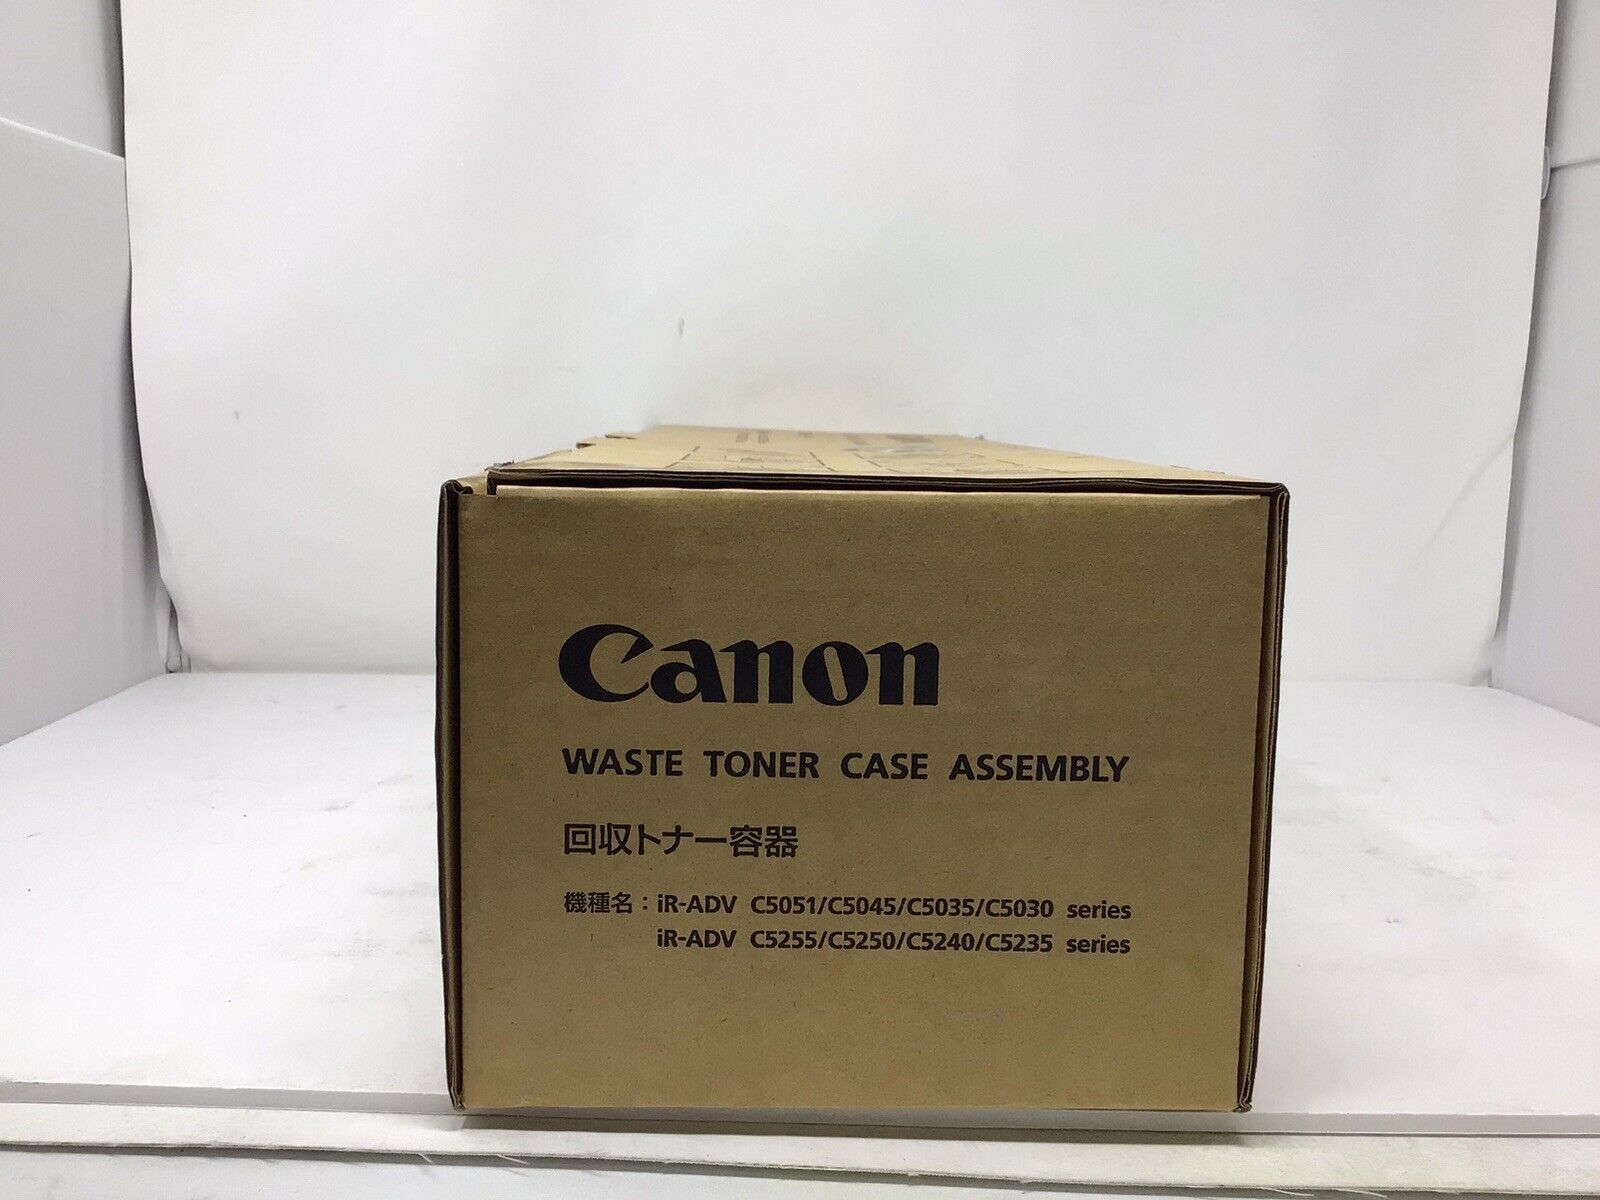 Genuine Canon Waste Toner Case Assembly IR-ADV C5051/C5235 New /